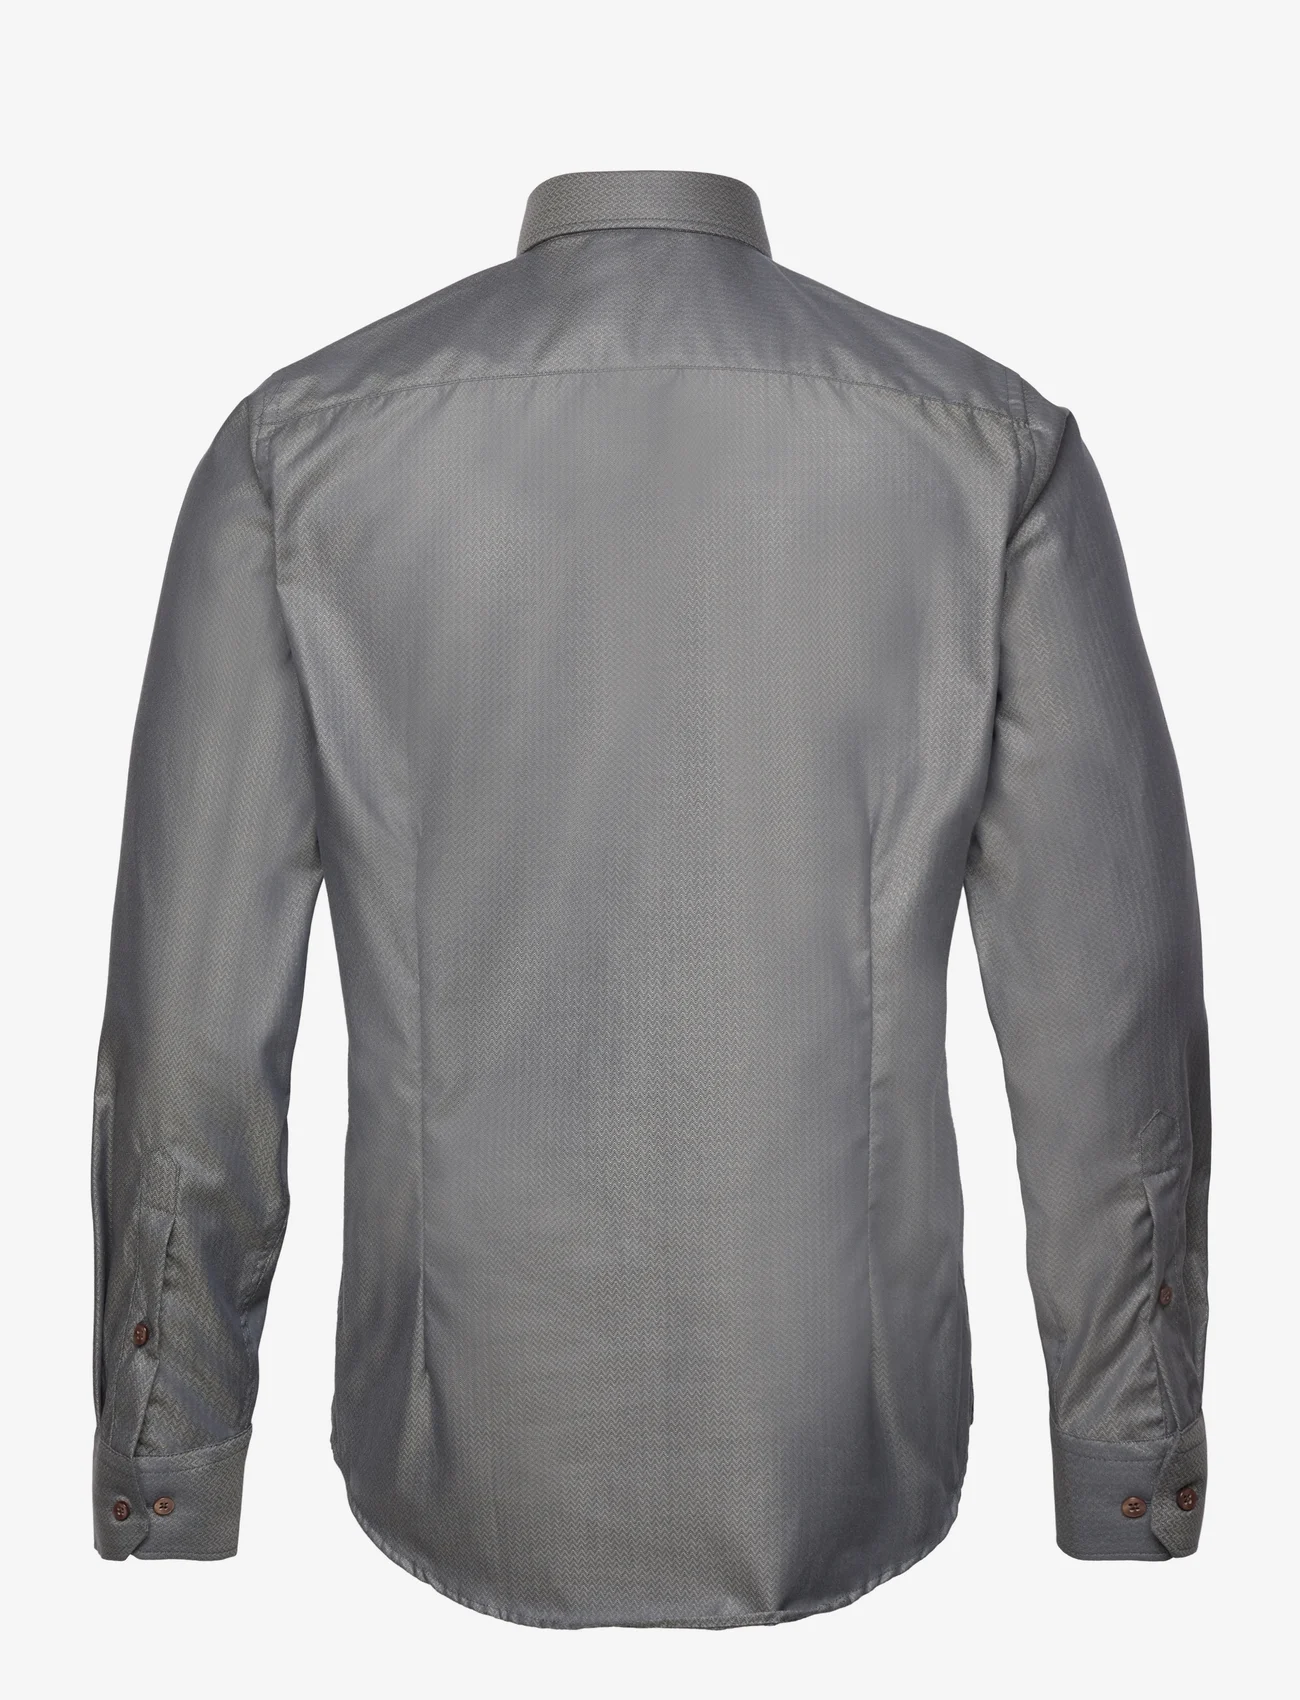 Bosweel Shirts Est. 1937 - Slim fit Mens shirt - podstawowe koszulki - grey - 1